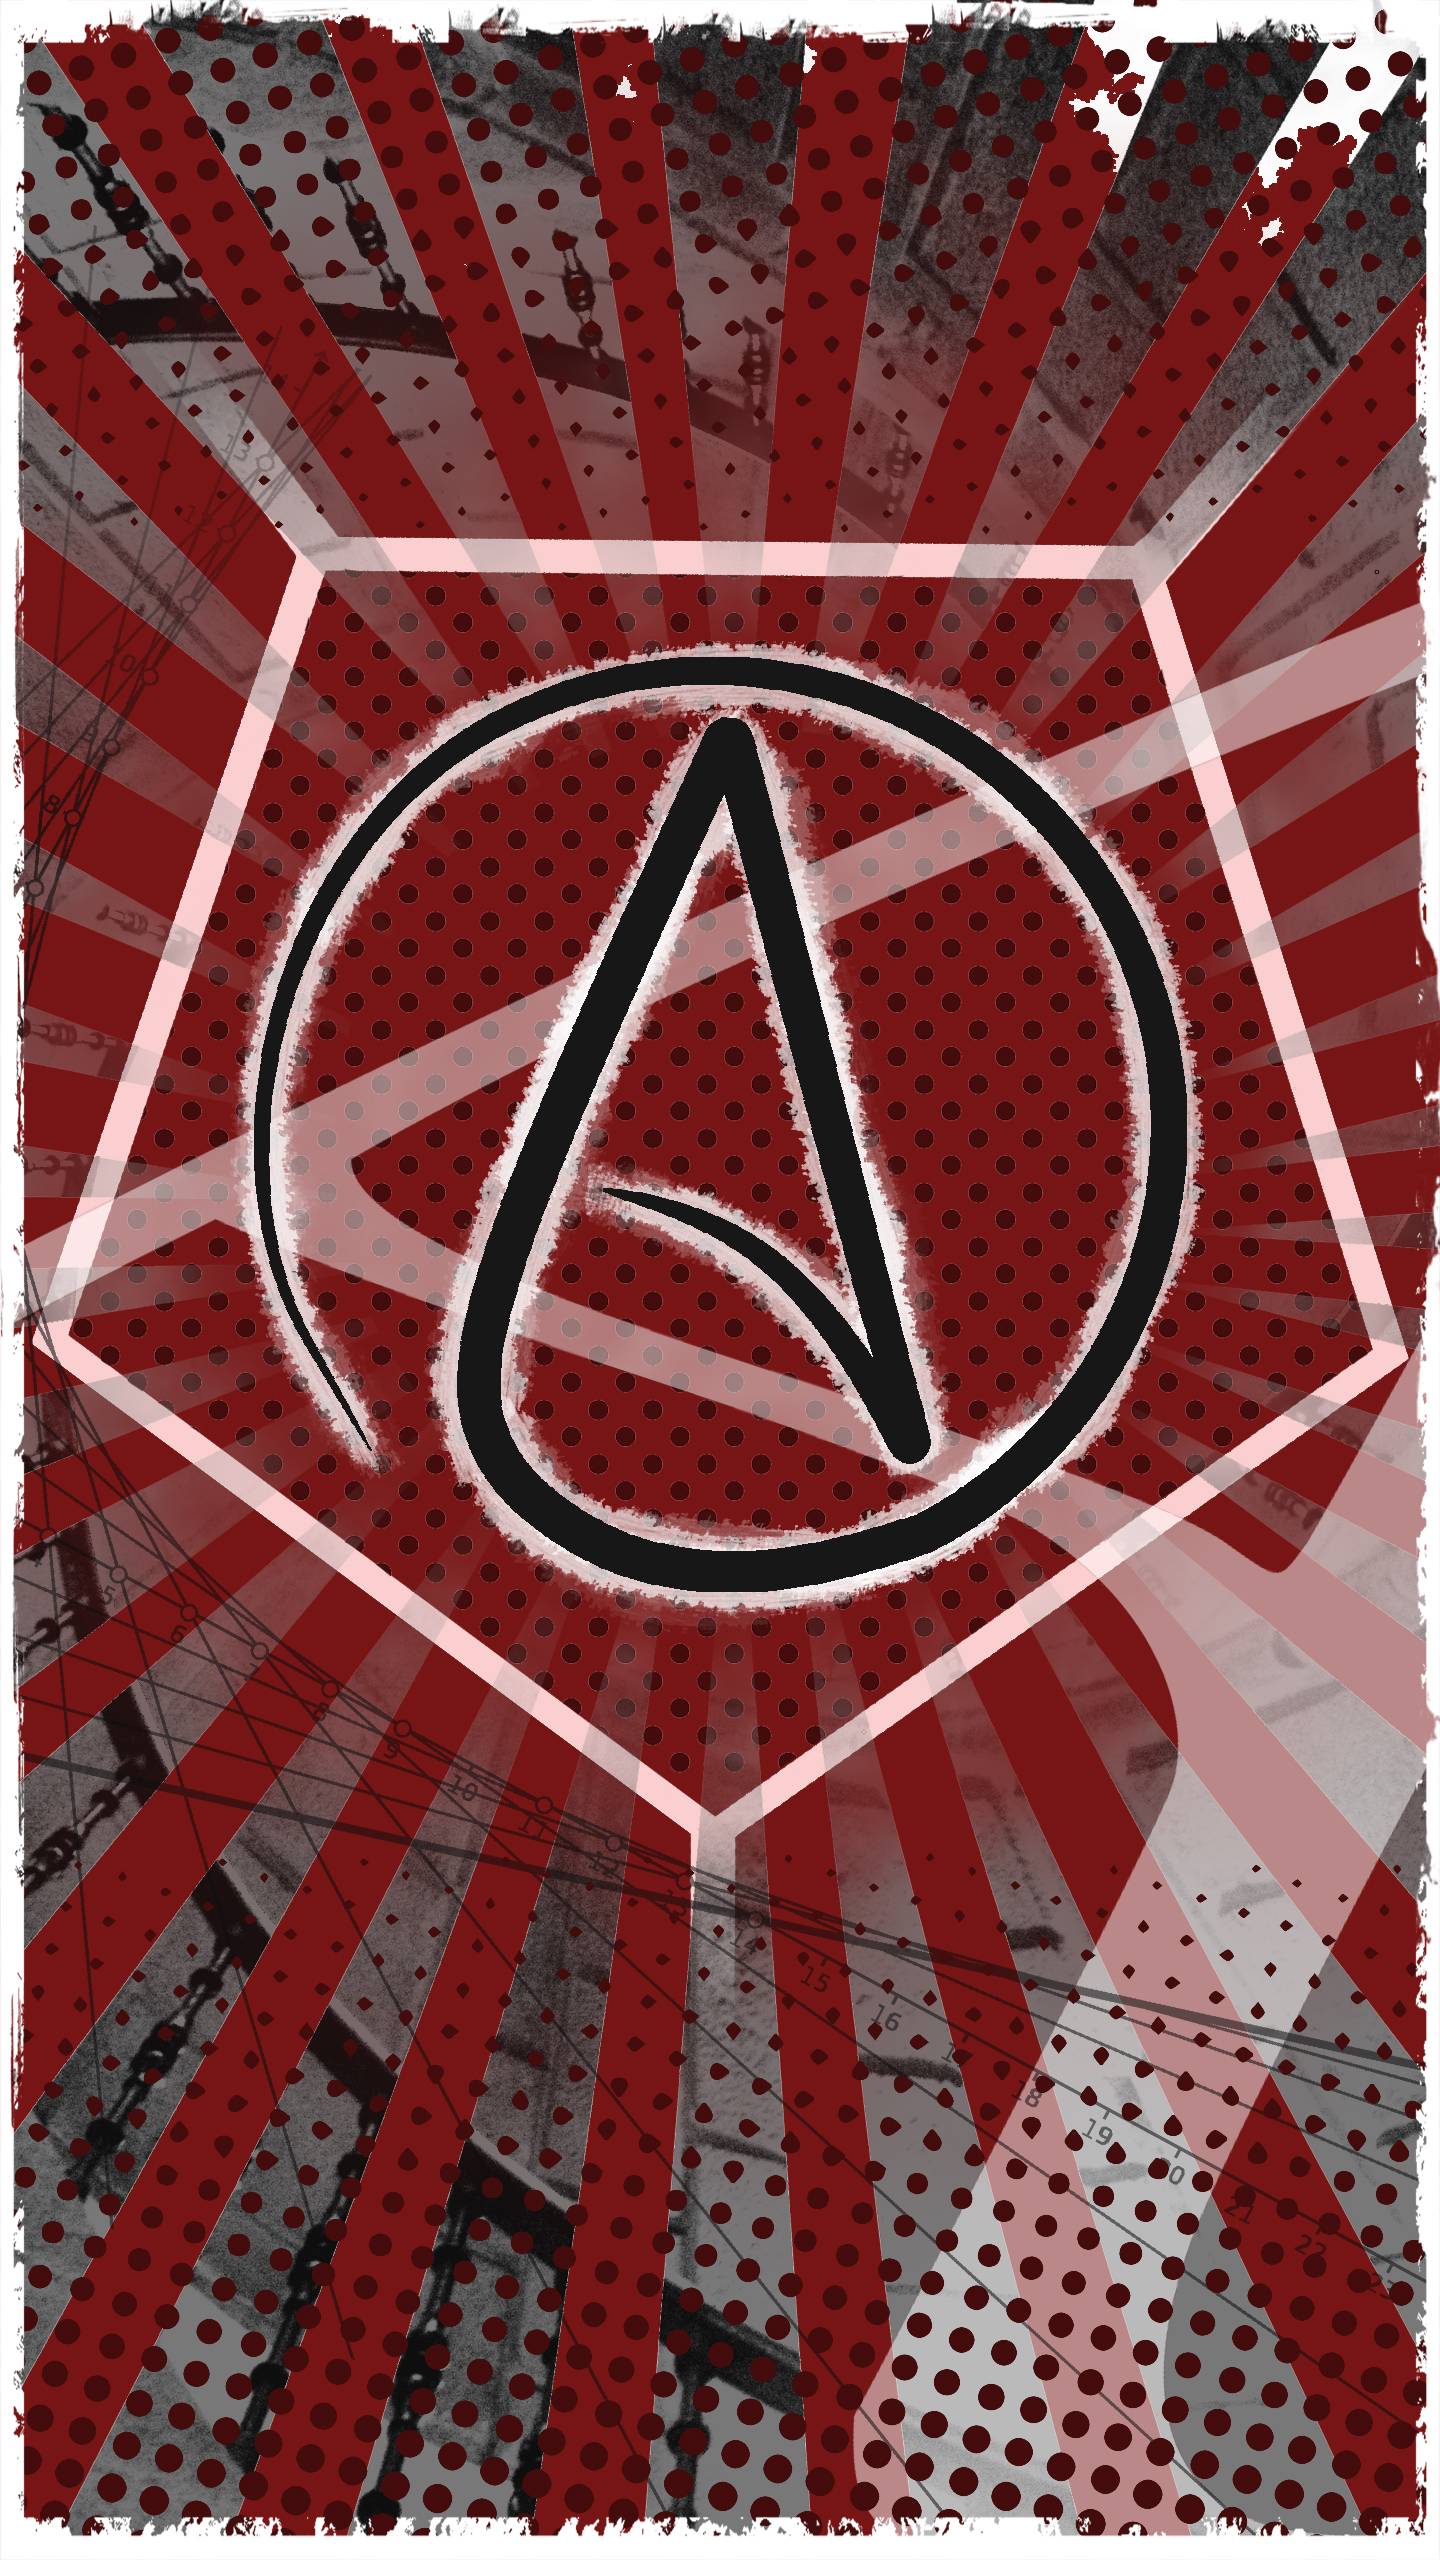 I made an Atheist phone wallpaper